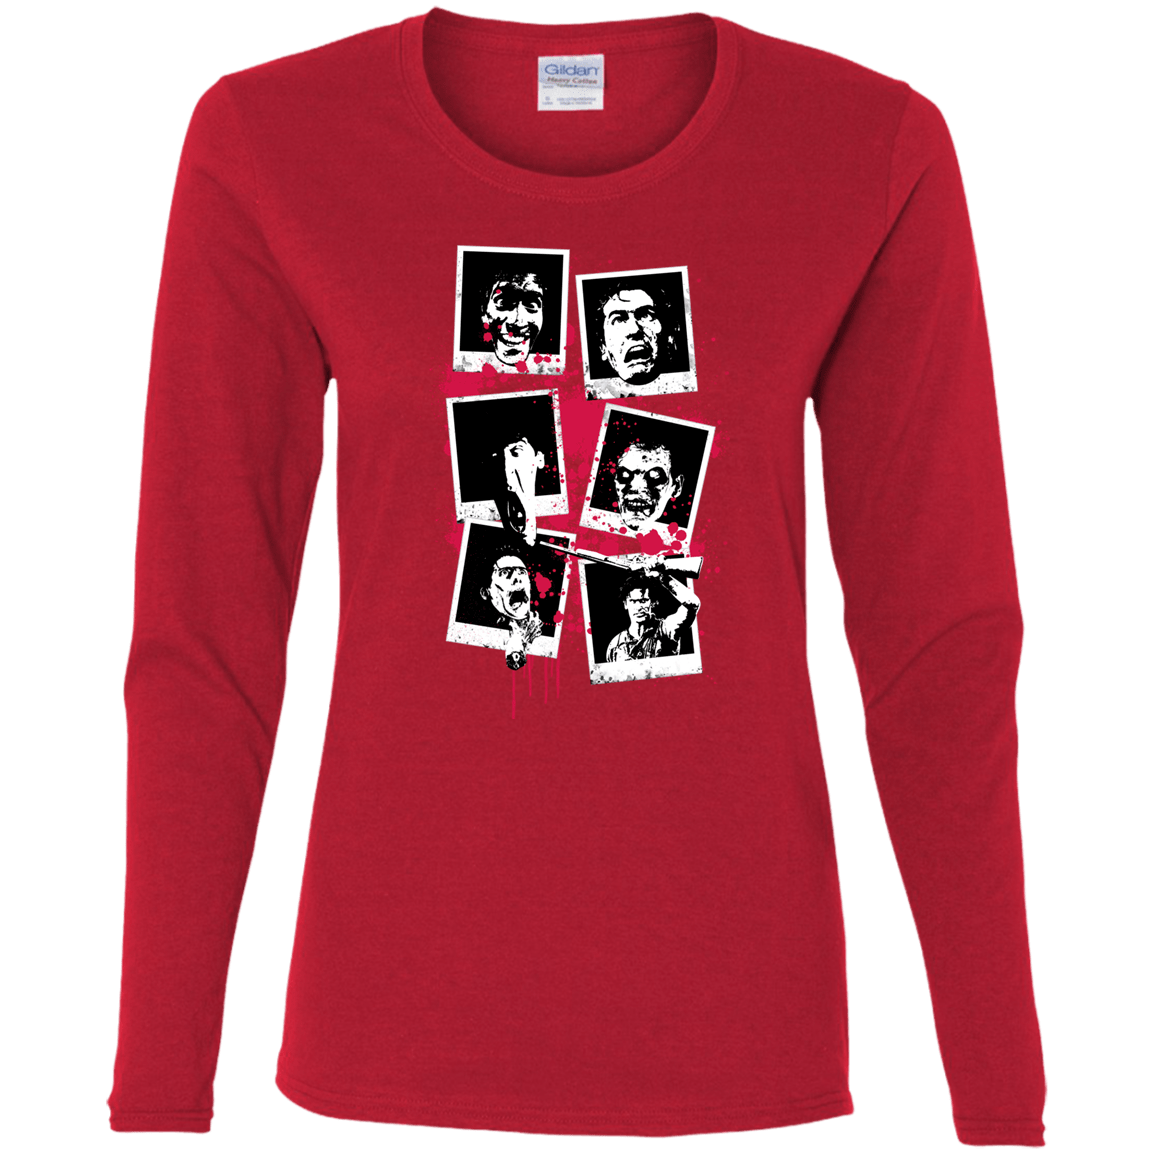 T-Shirts Red / S My Evil Self Women's Long Sleeve T-Shirt